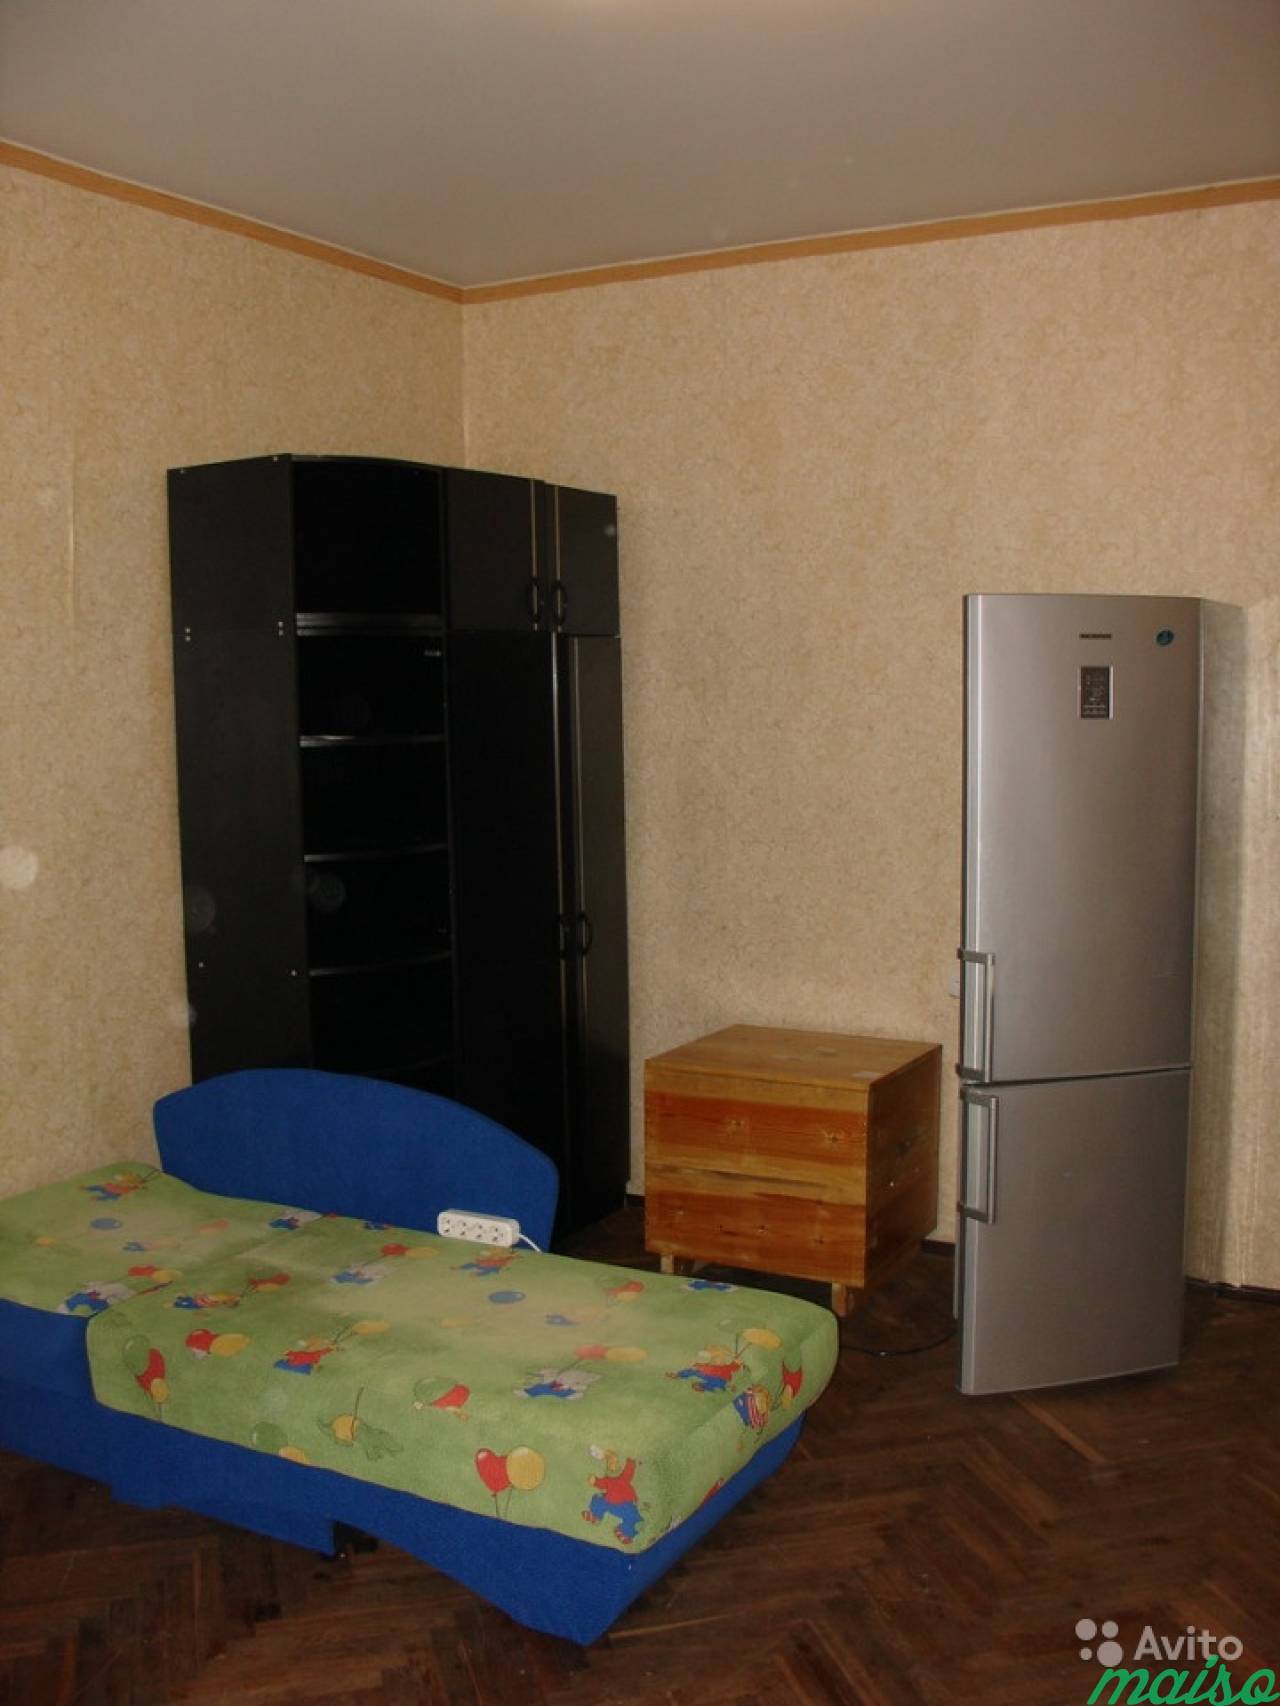 Комната 21.2 м² в 4-к, 2/3 эт. в Санкт-Петербурге. Фото 2